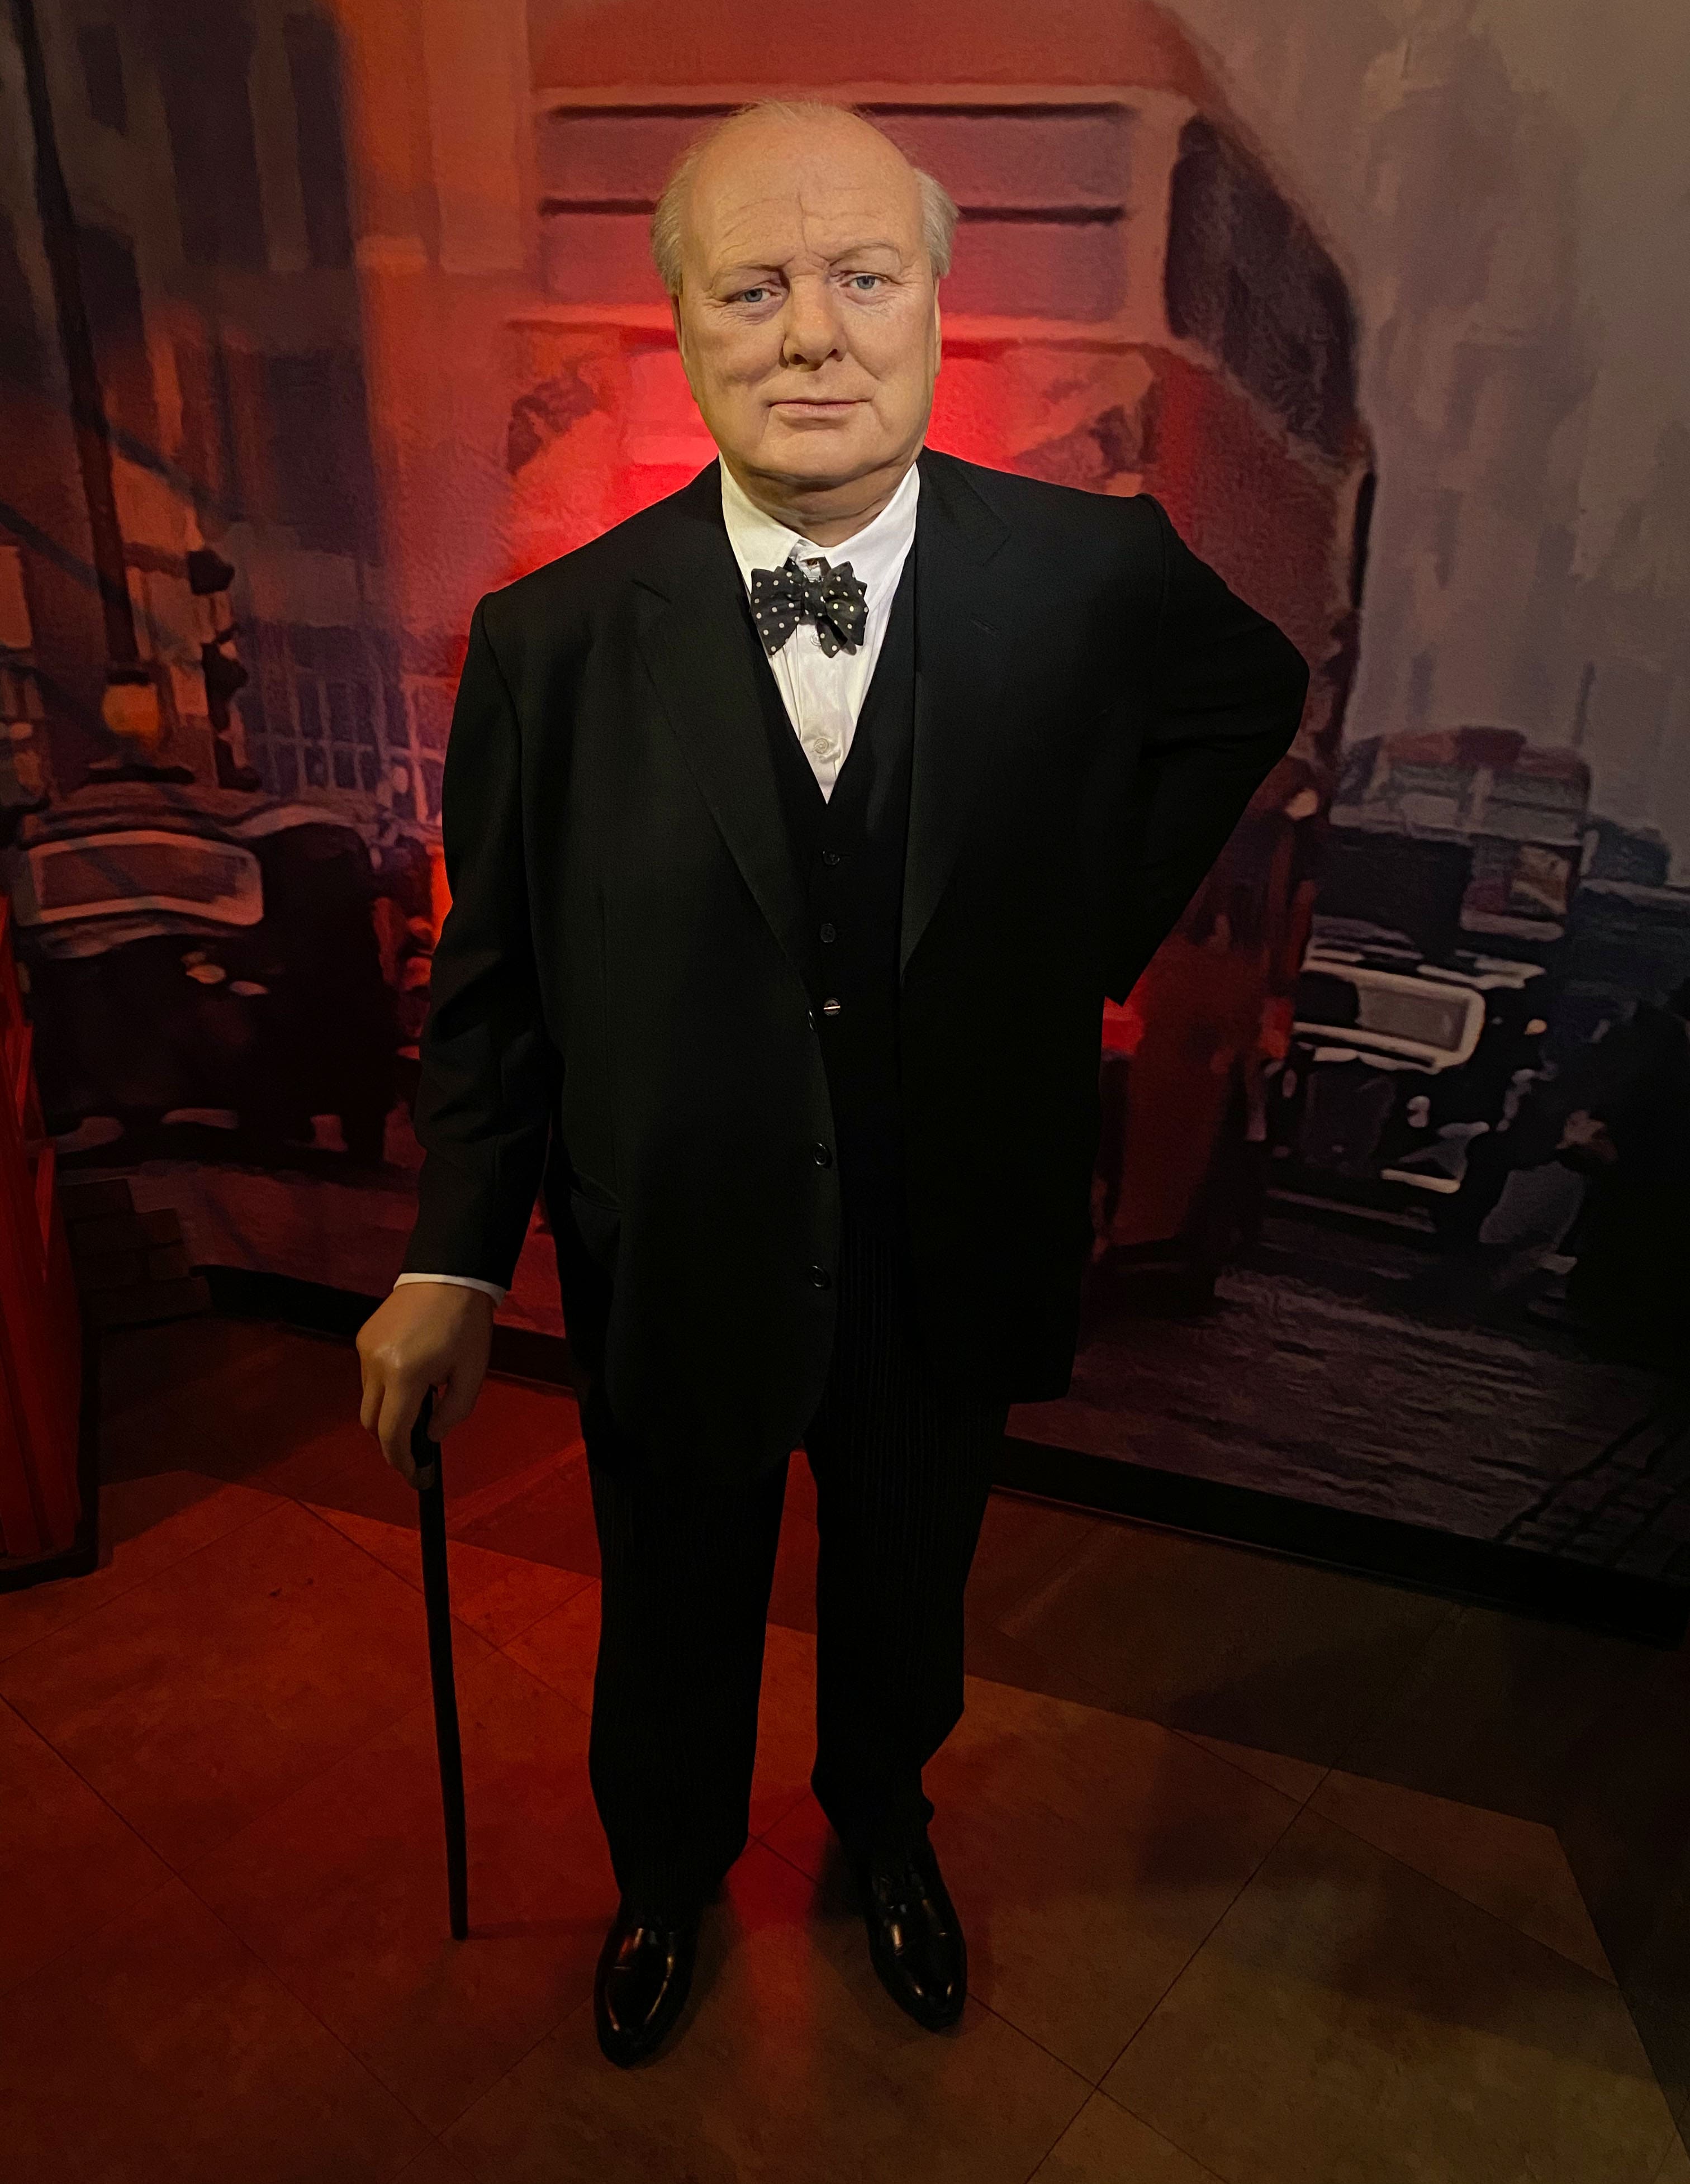 Meet former prime minister Winston Churchill at Madame Tussauds™ Vienna